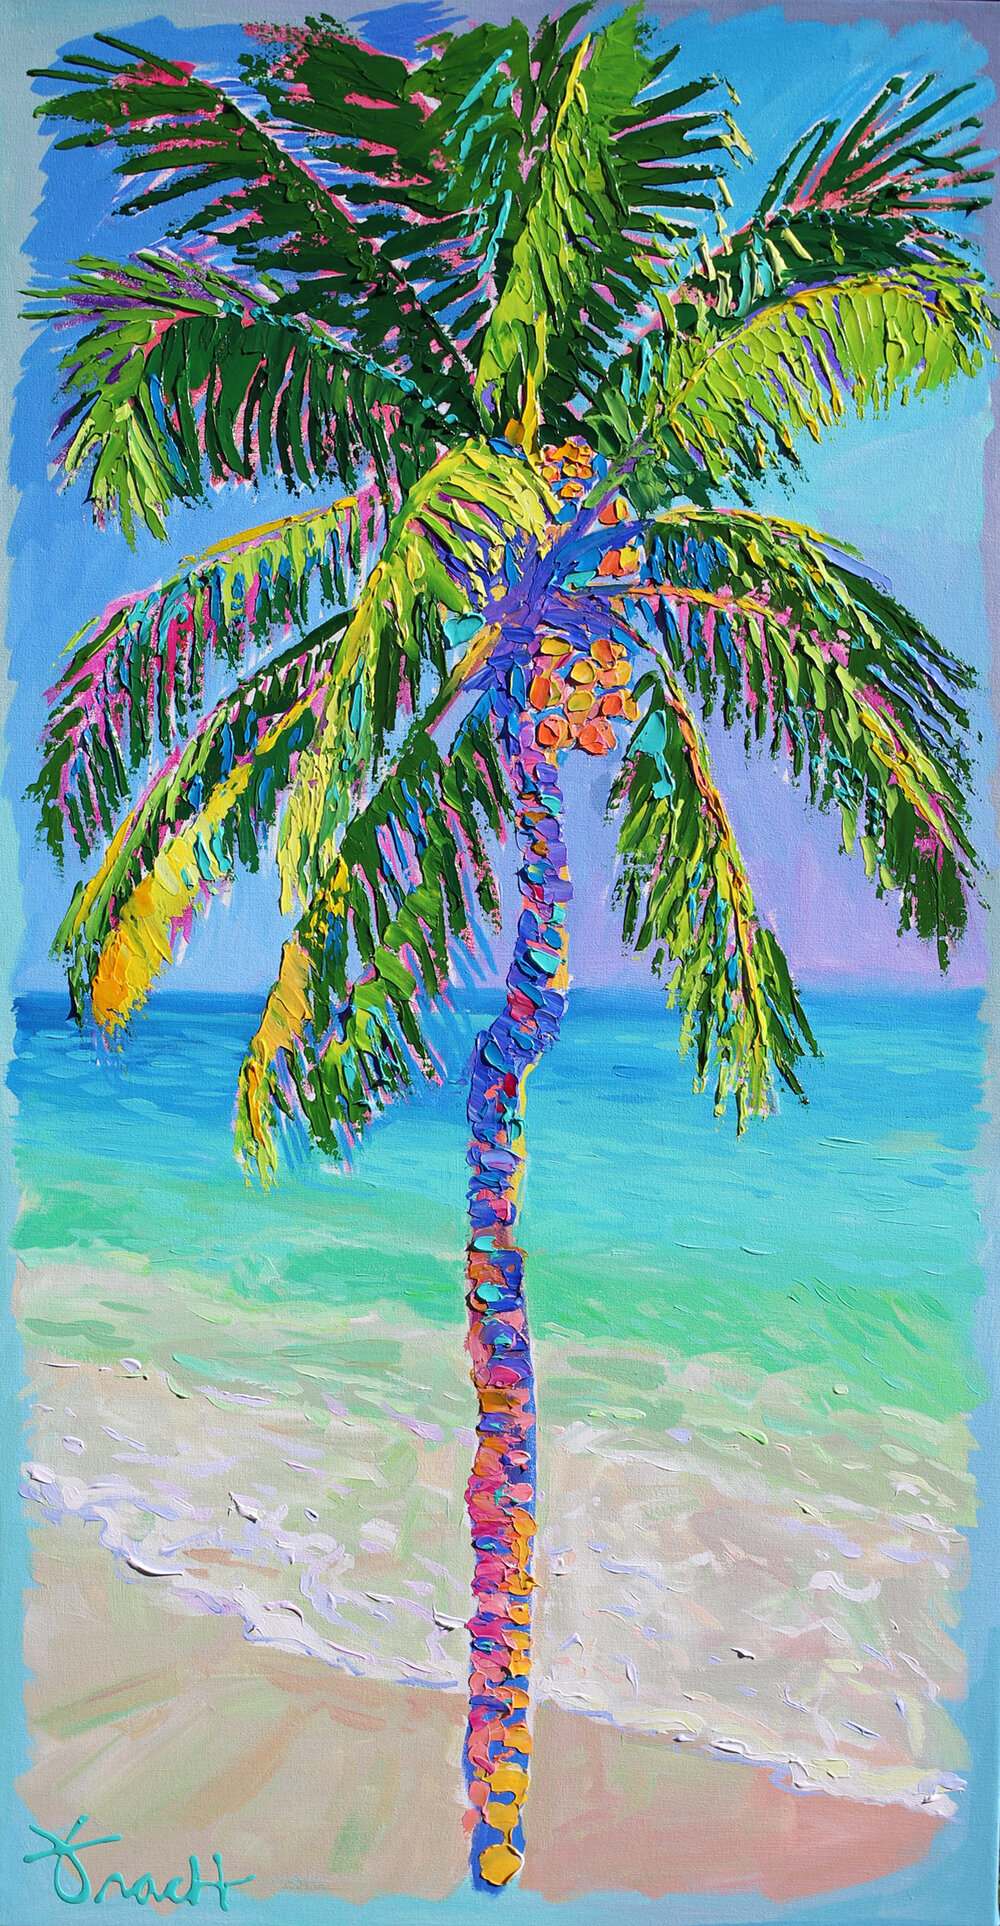 Nipitshop Patches Beautiful Coconut Palm Tree Island Summer Beach